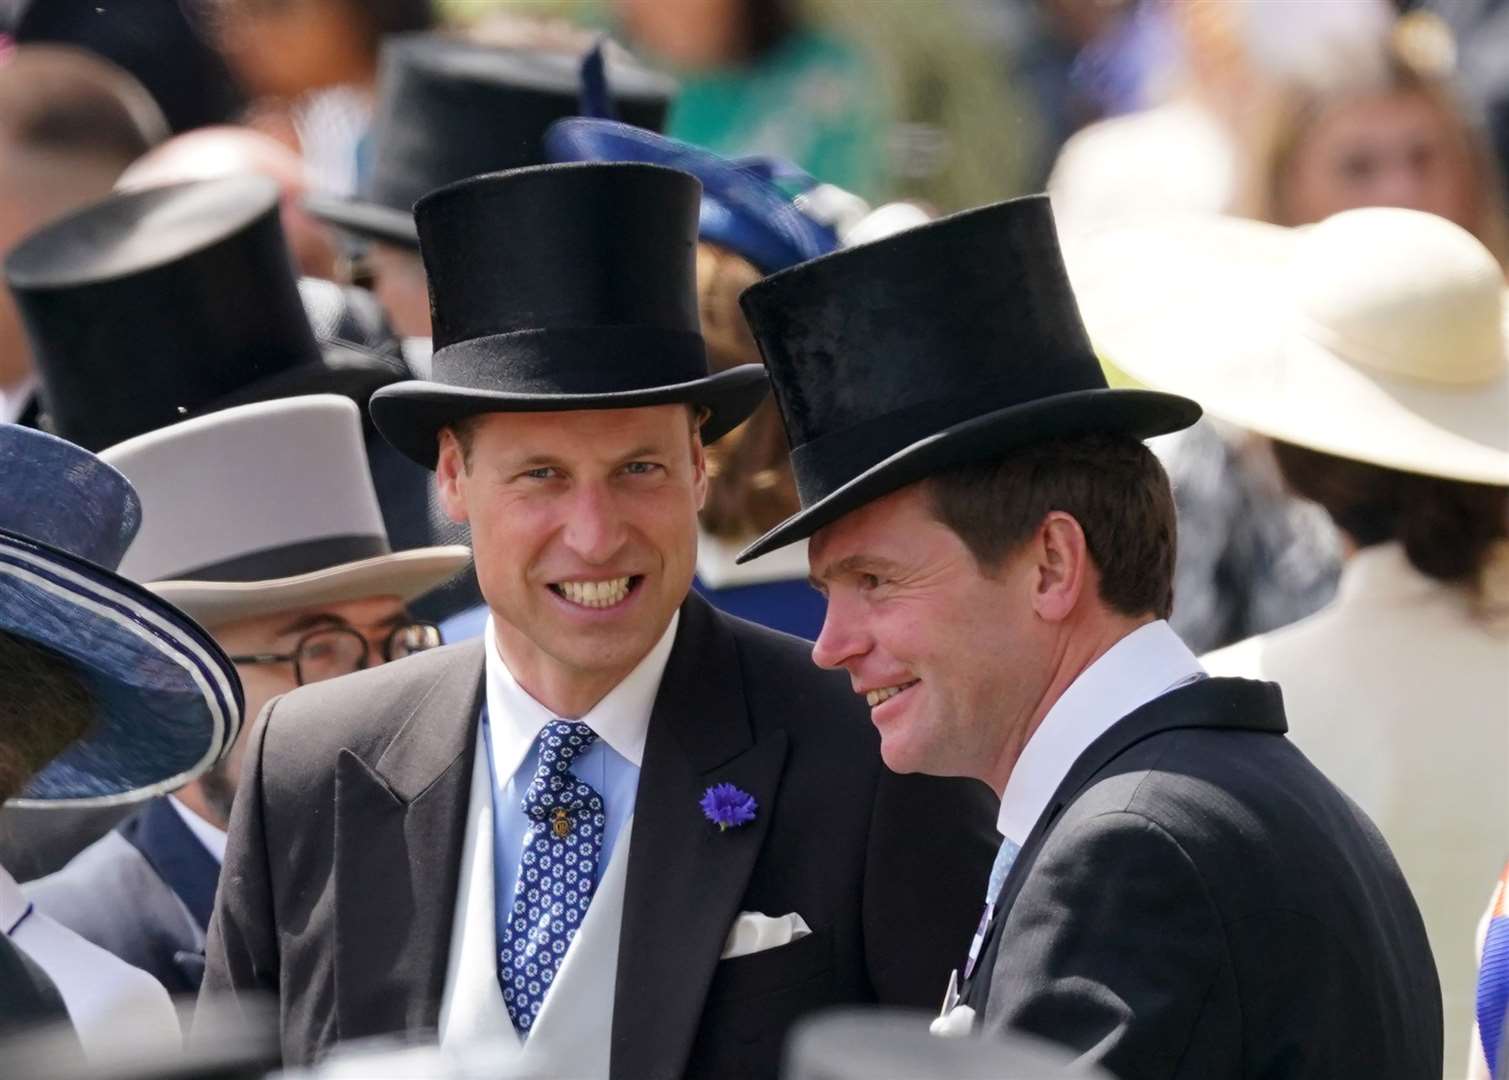 The Prince of Wales at Royal Ascot on Wednesday (Jonathan Brady/PA)